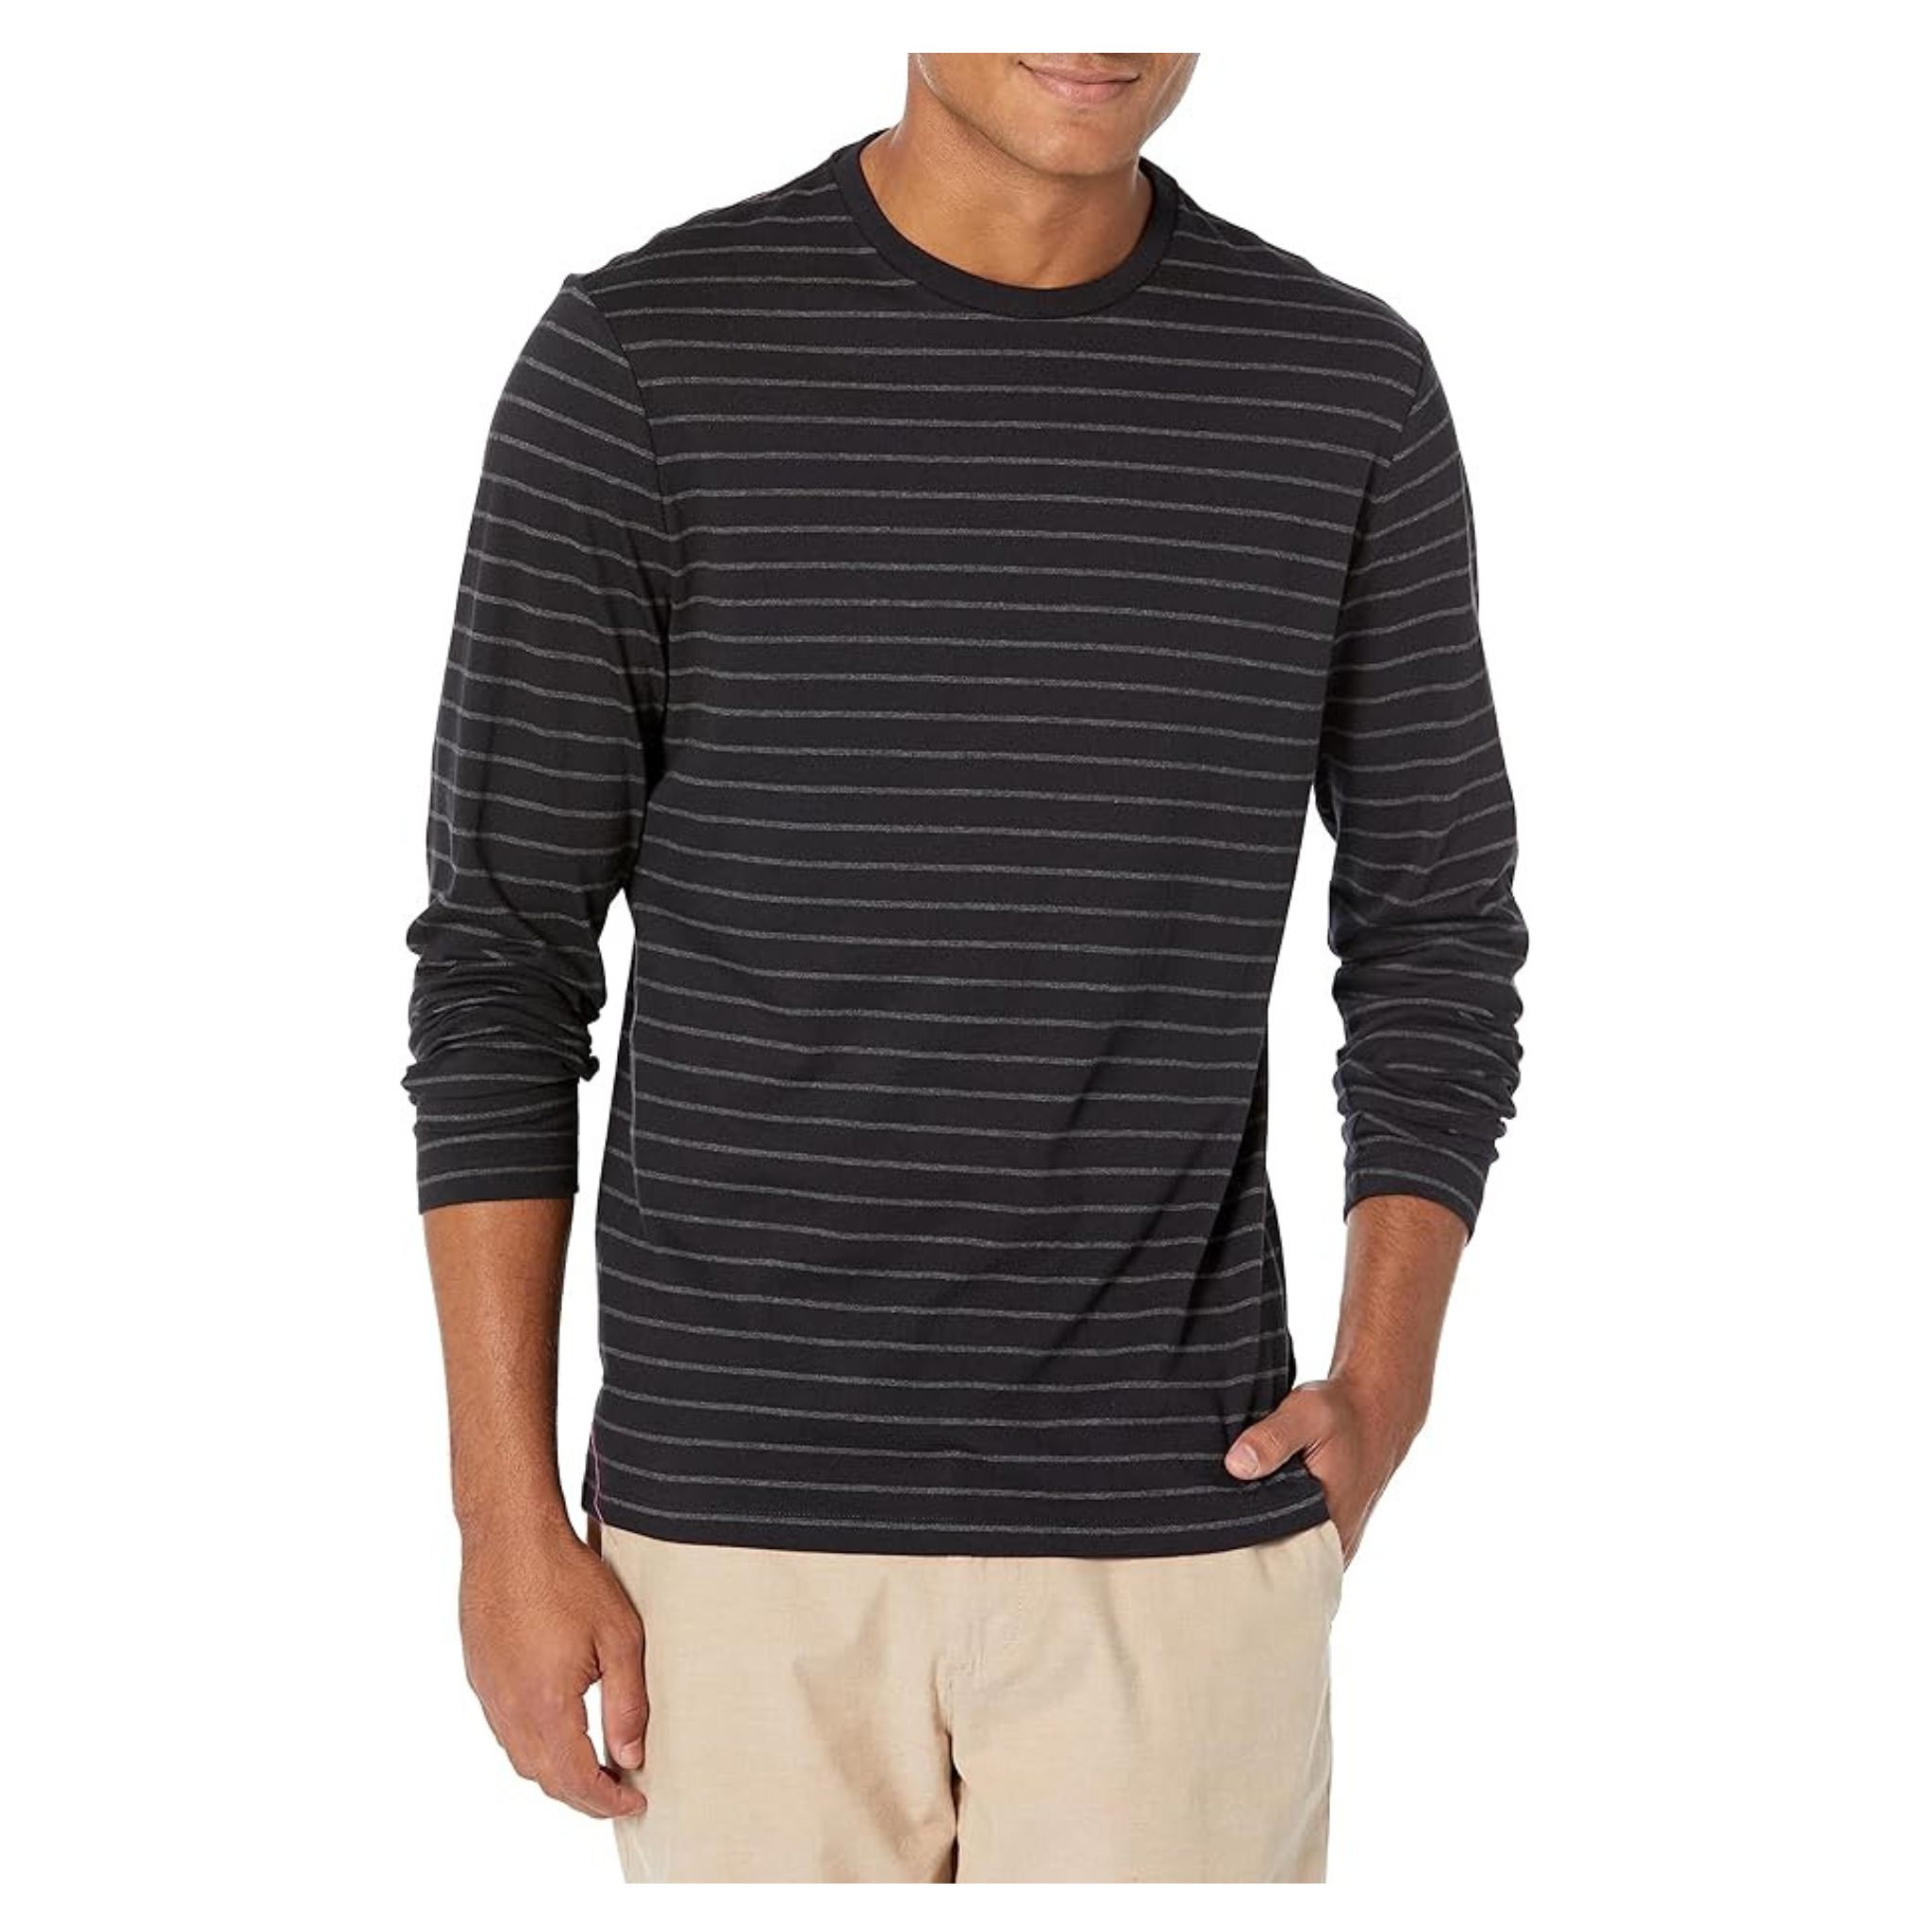 Amazon Essentials Men's Slim-Fit Long-Sleeve T-Shirt